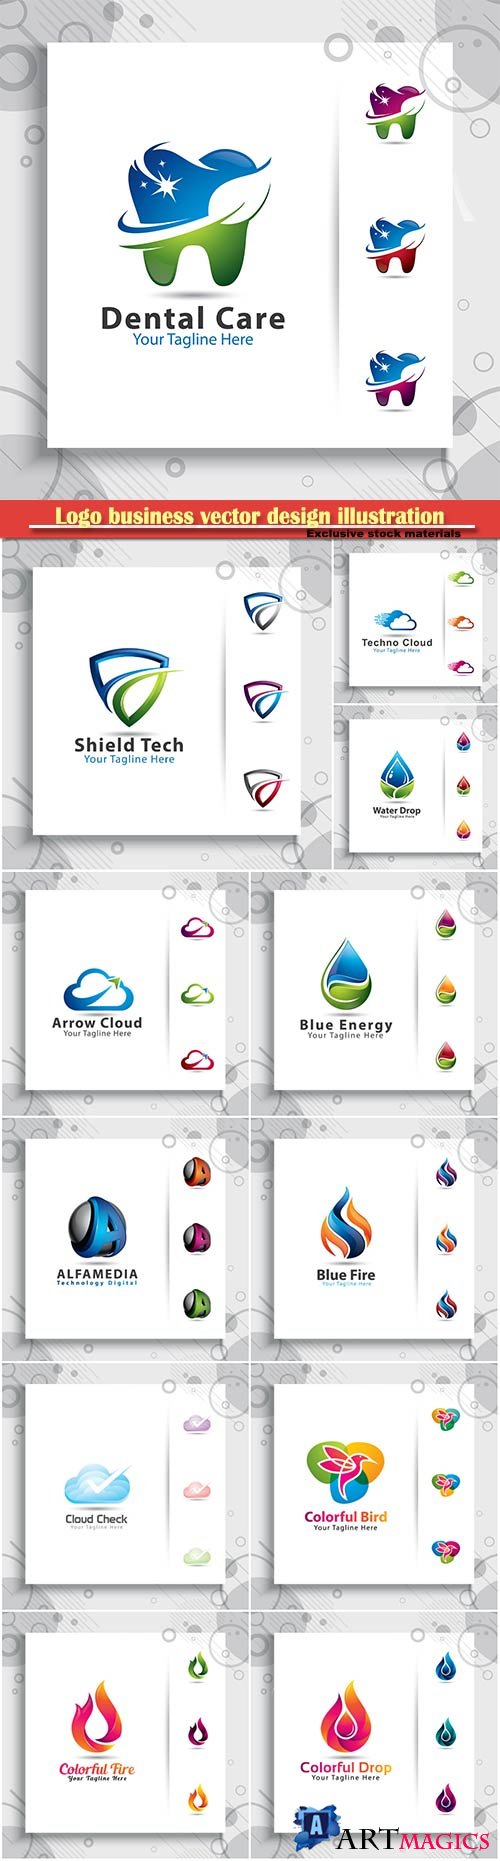 Logo business vector design illustration